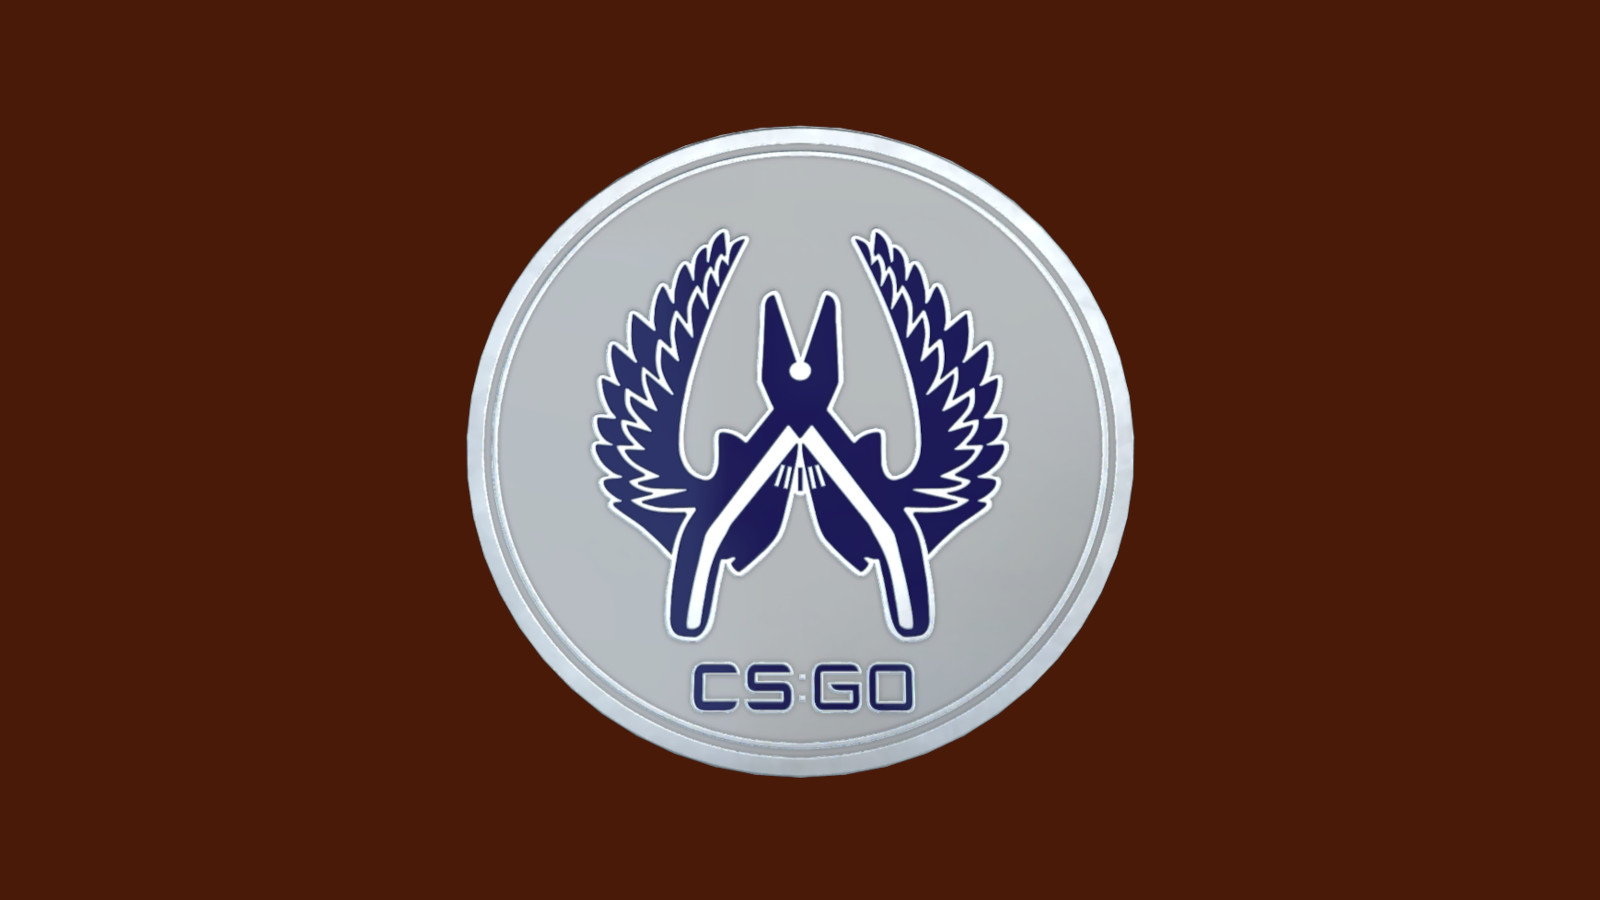 CS:GO - Series 3 - Guardian 3 Collectible Pin [USD 225.98]